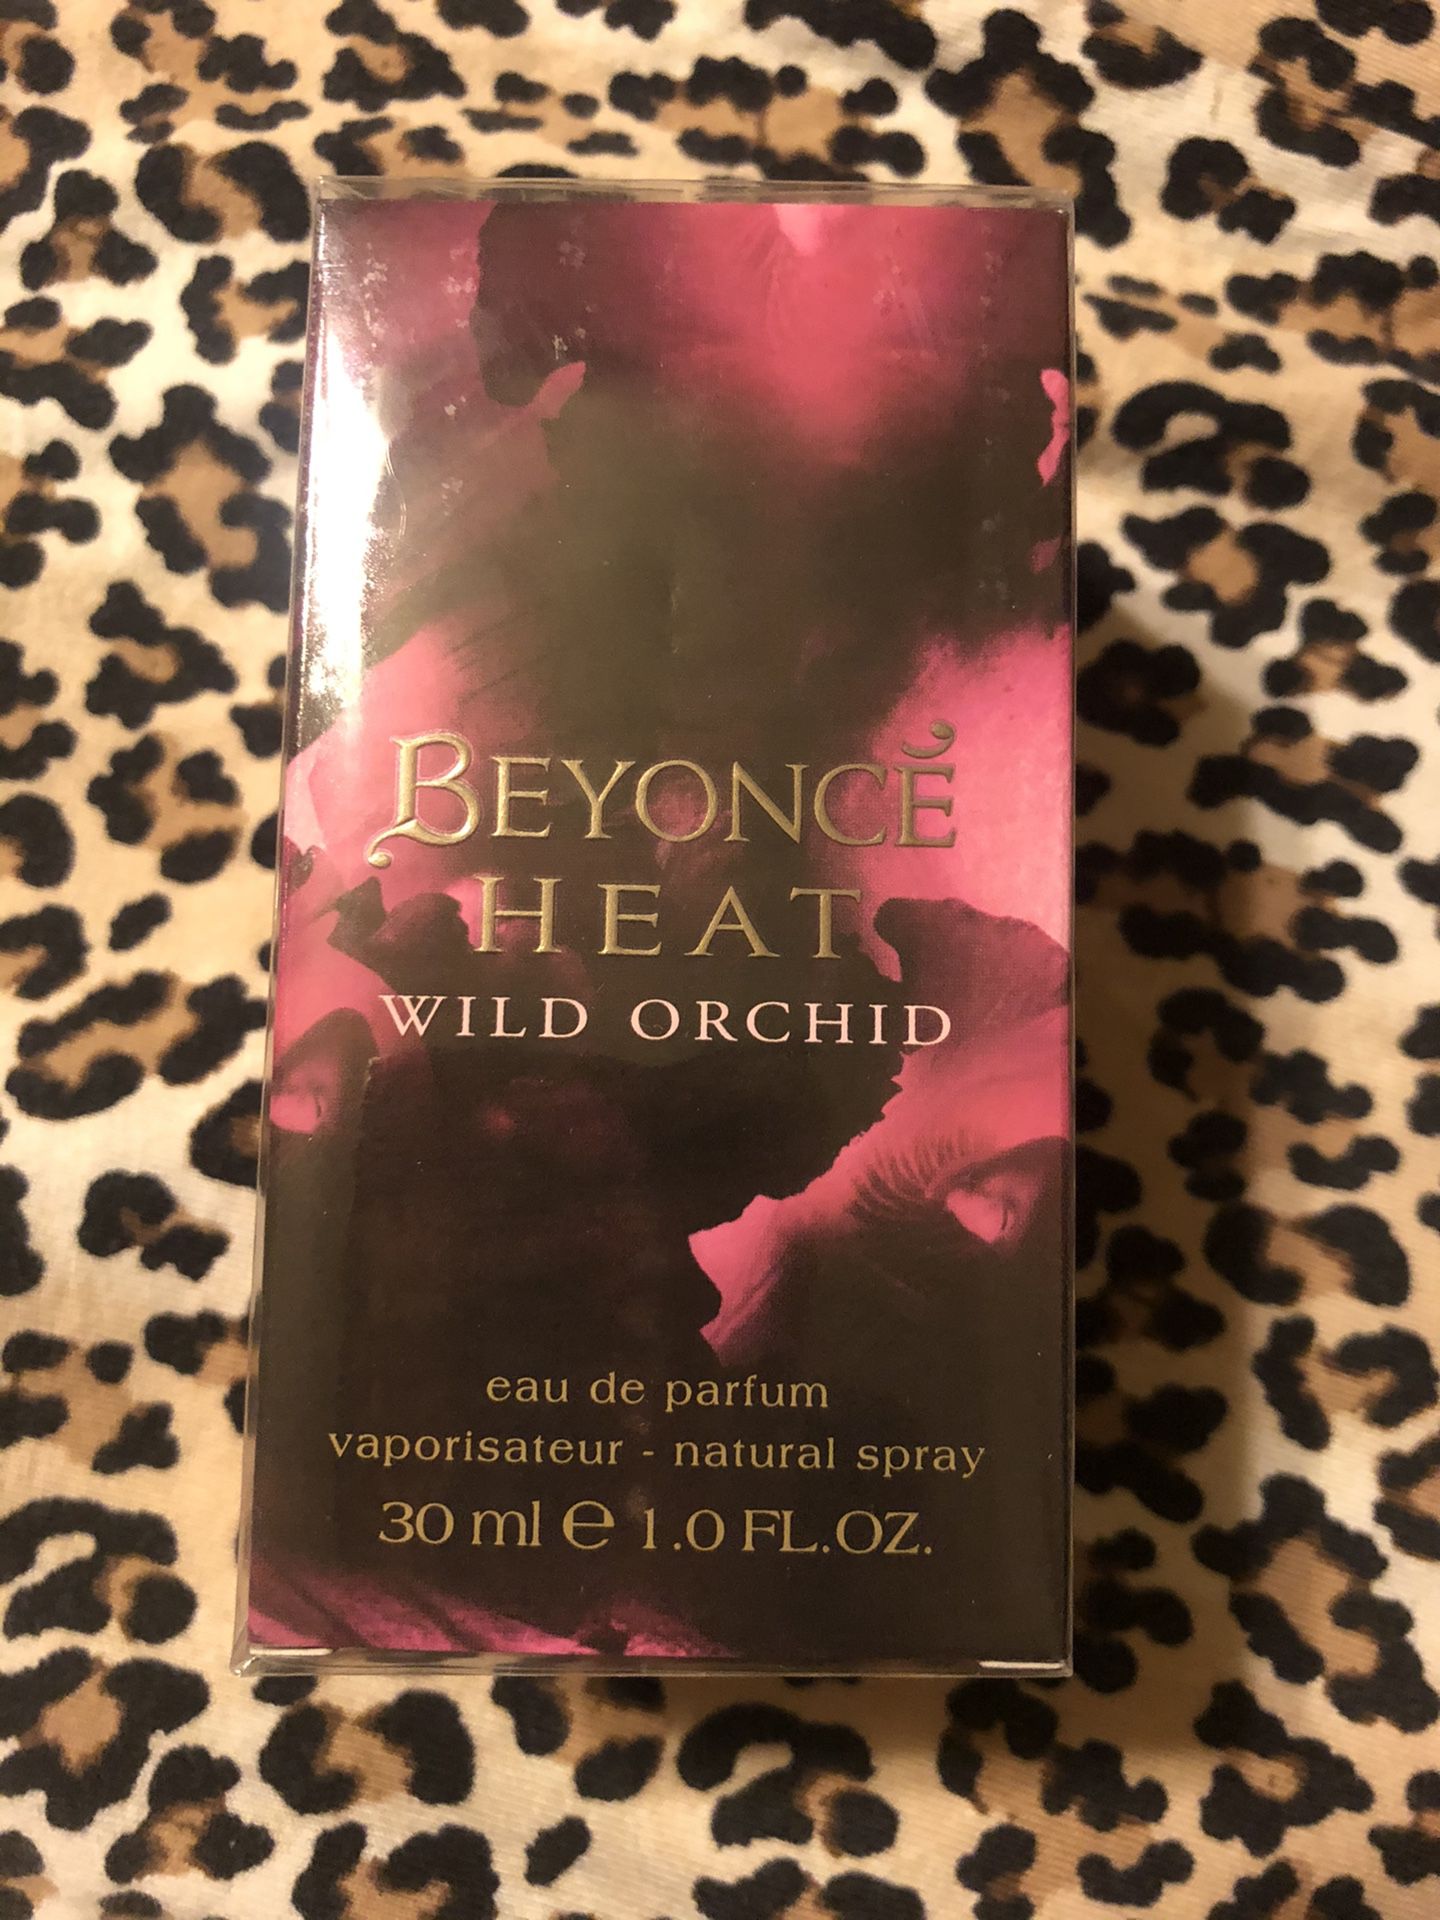 Beyoncé heat wild orchid perfume